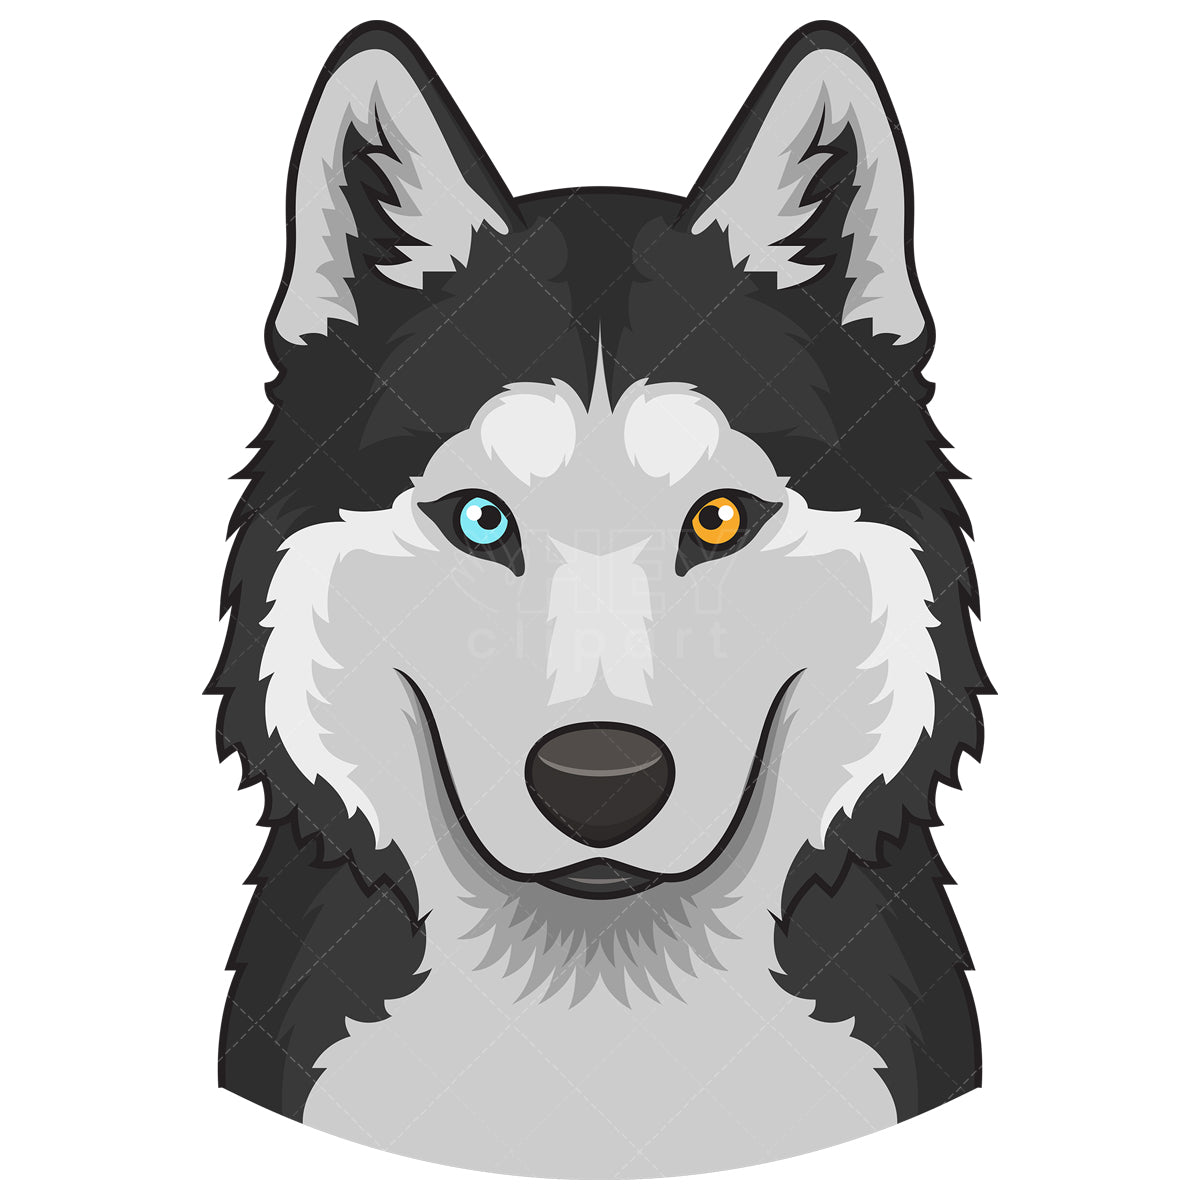 Royalty-free stock vector illustration of a siberian husky face.